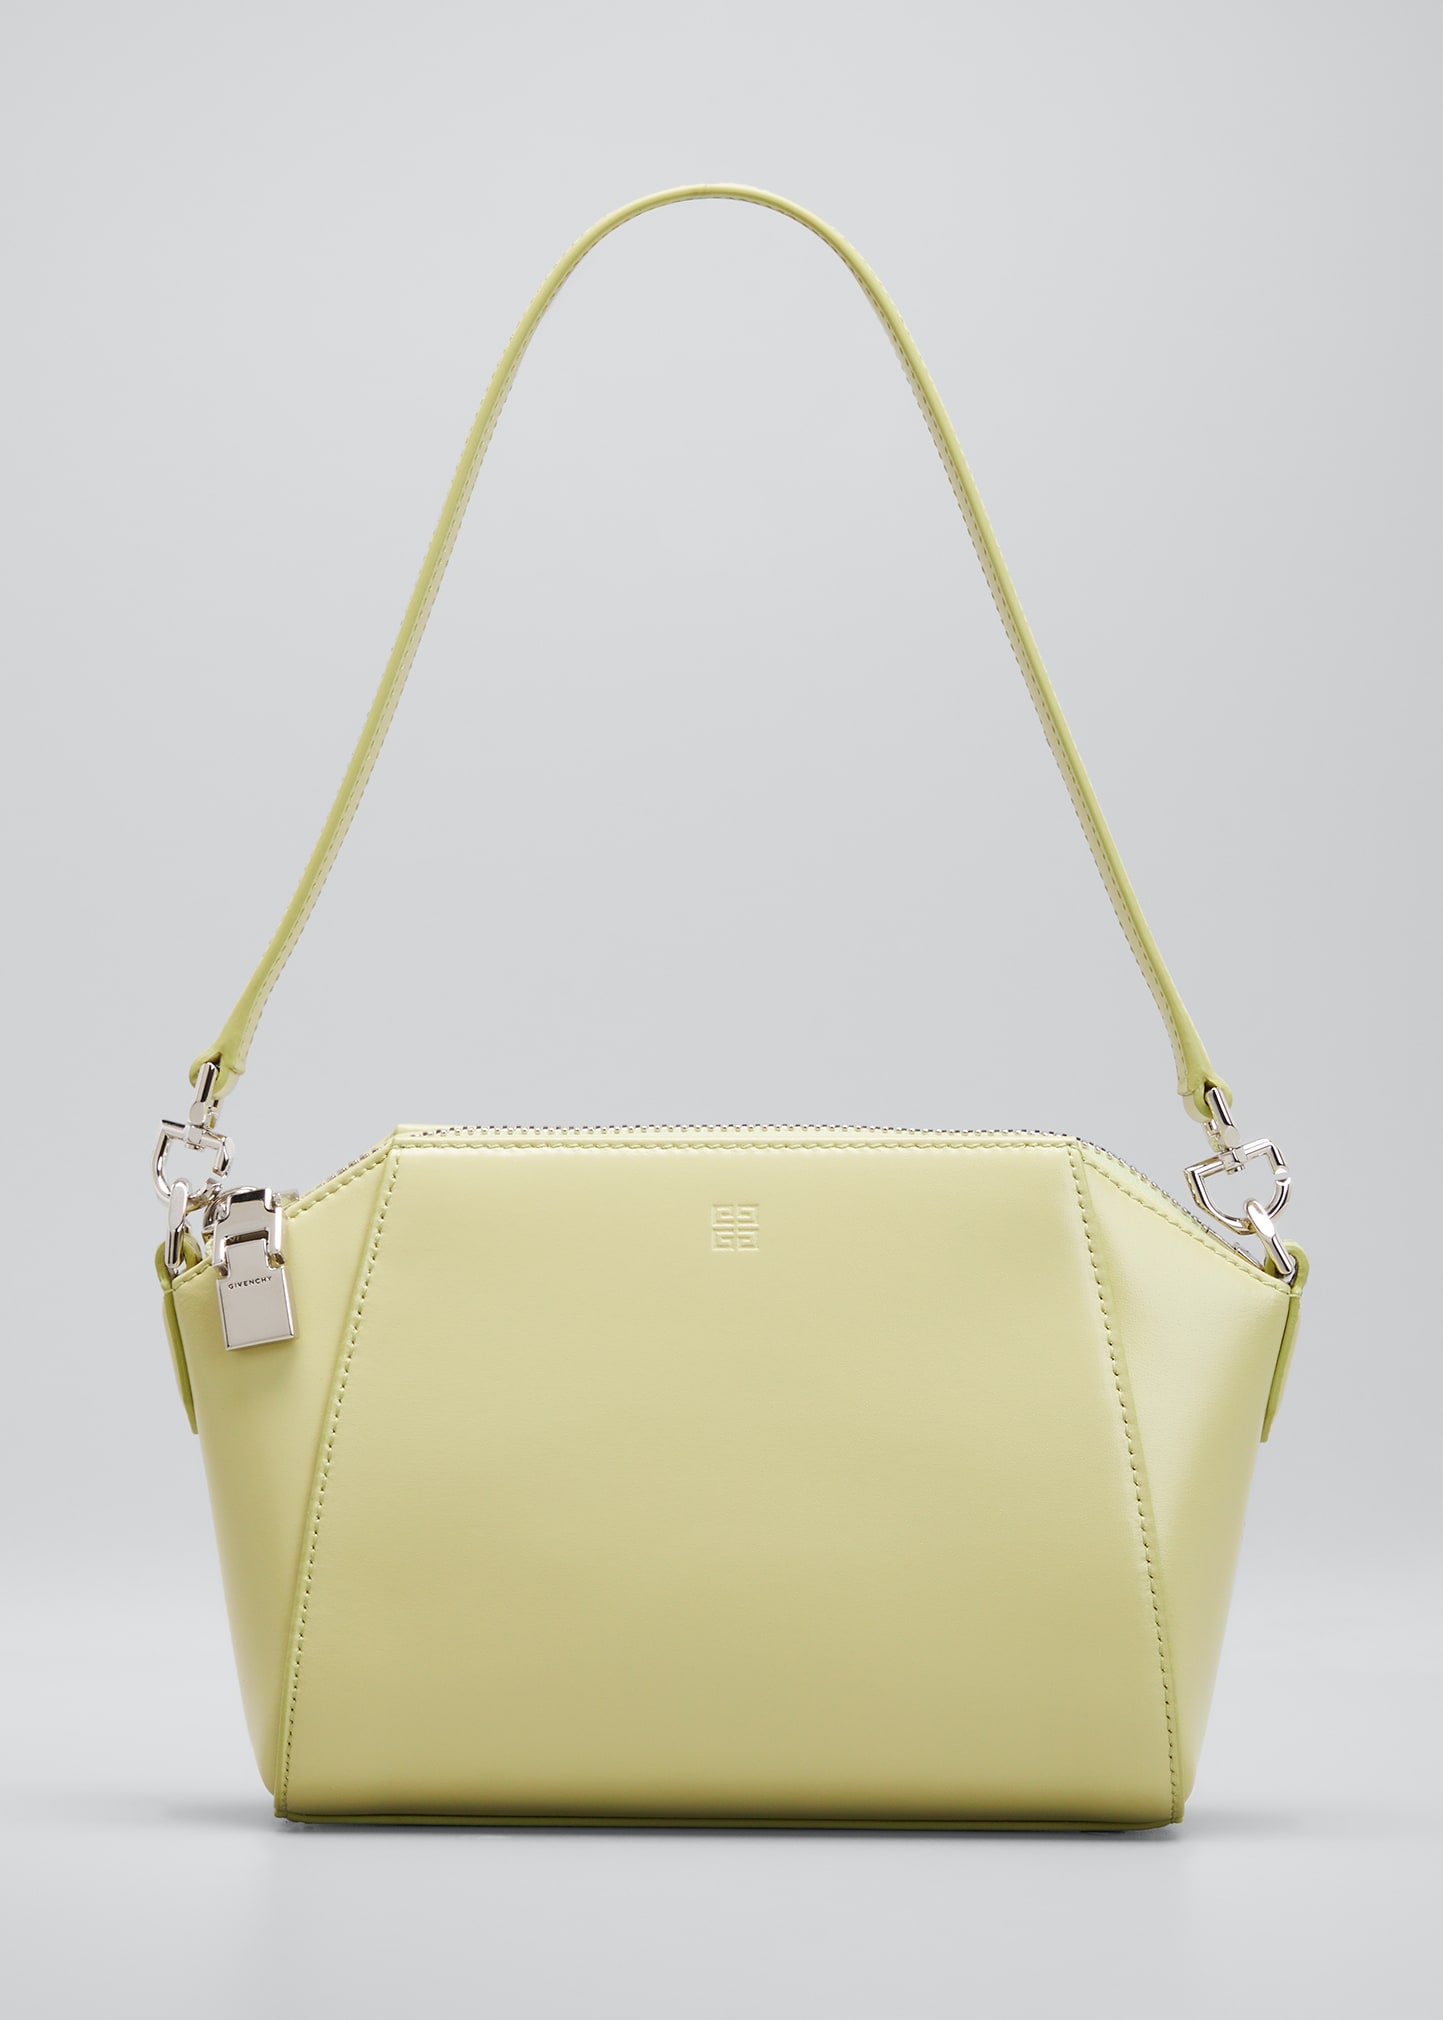 Givenchy Antigona XS Box Leather Bag